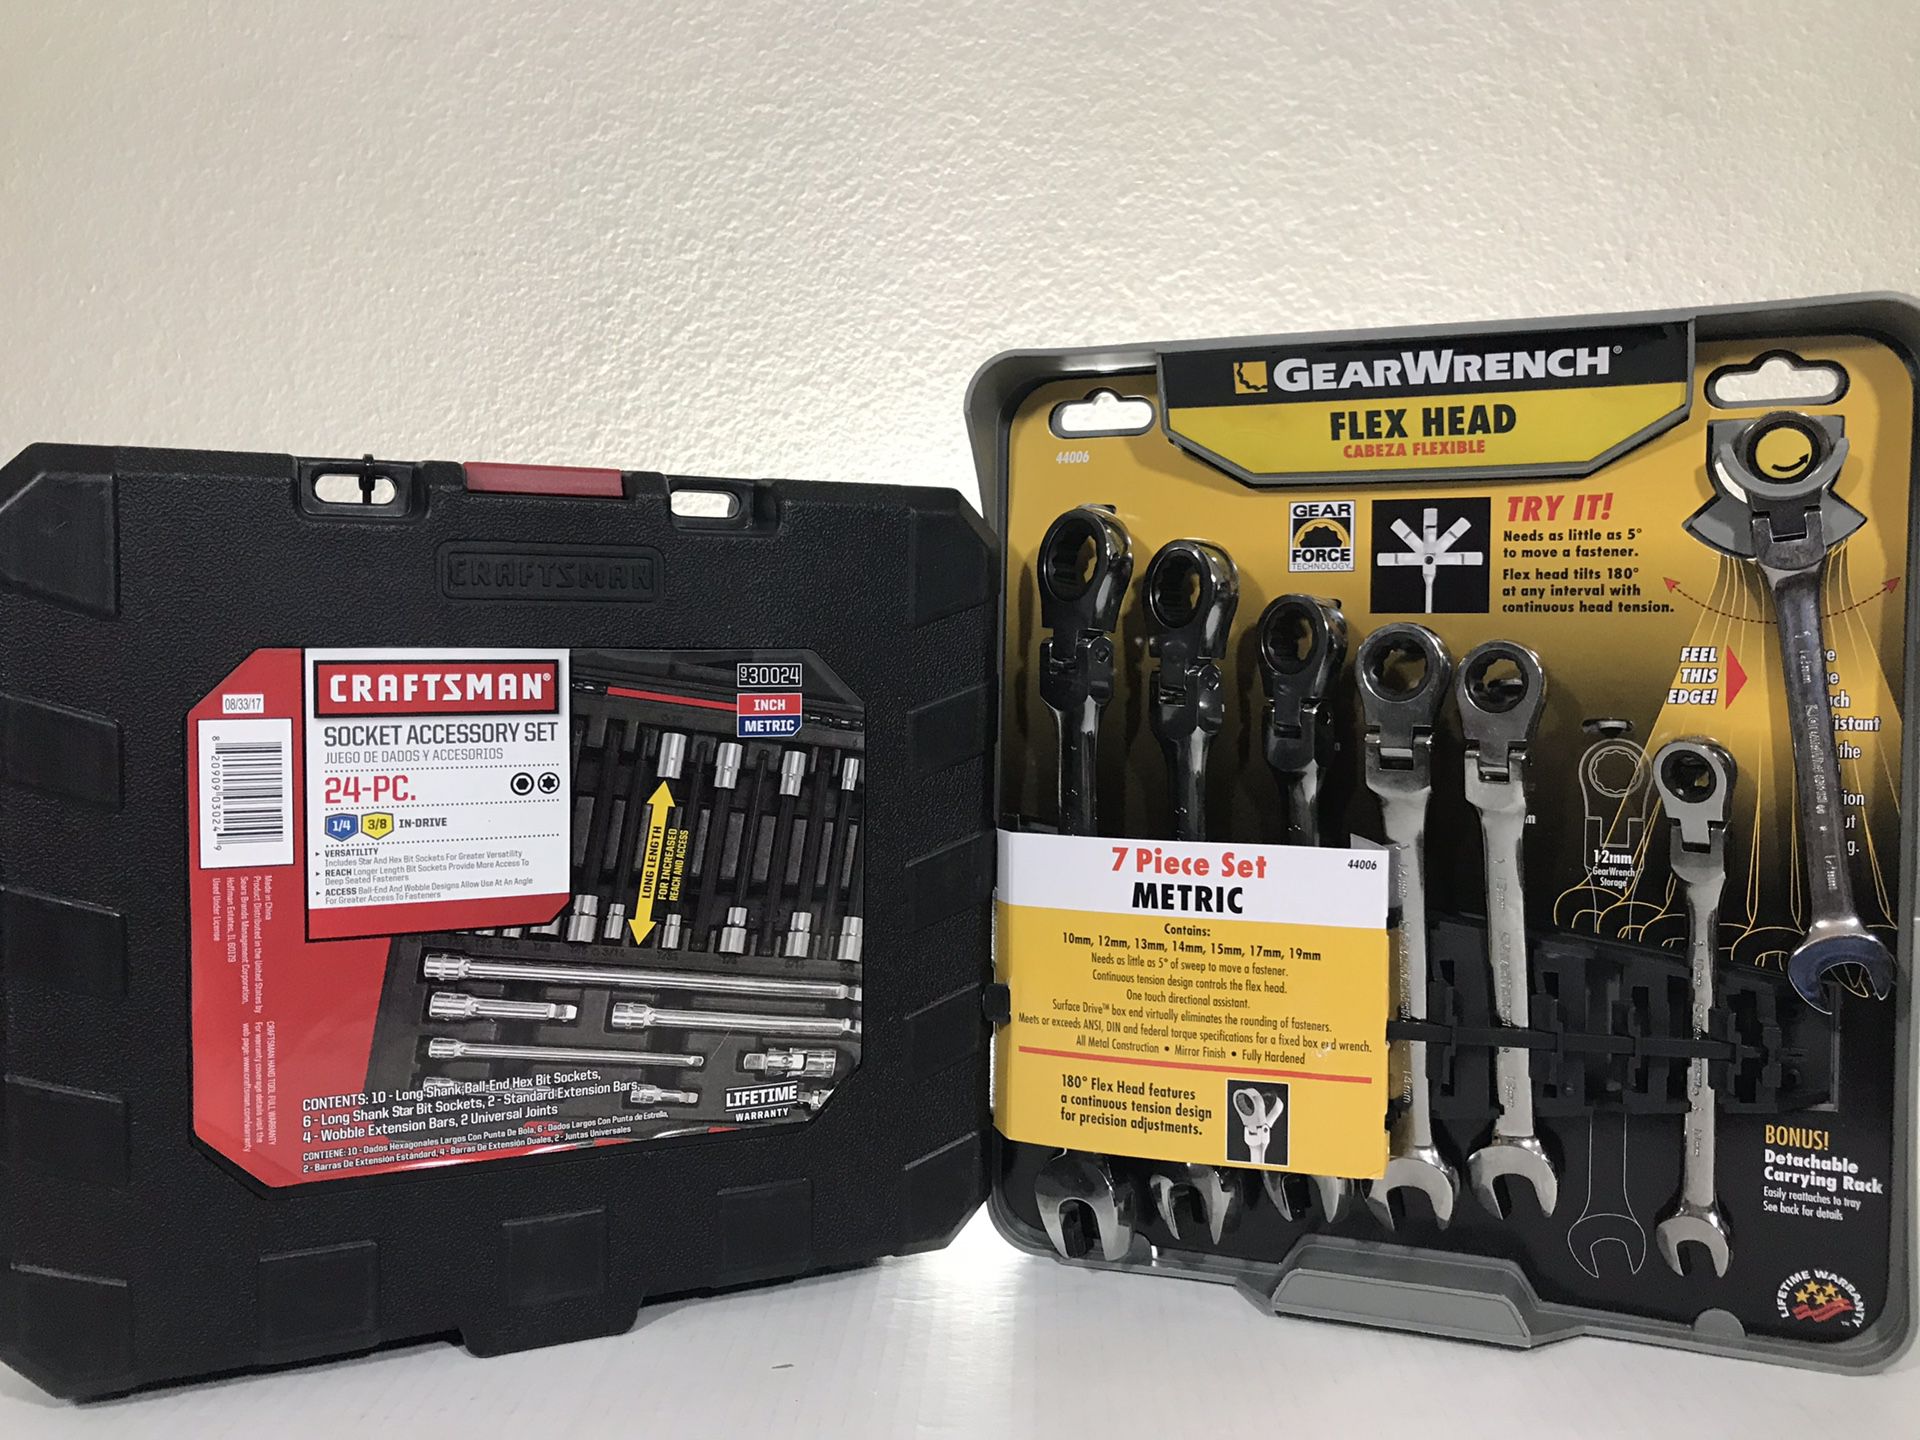 Craftsman + gear wrench